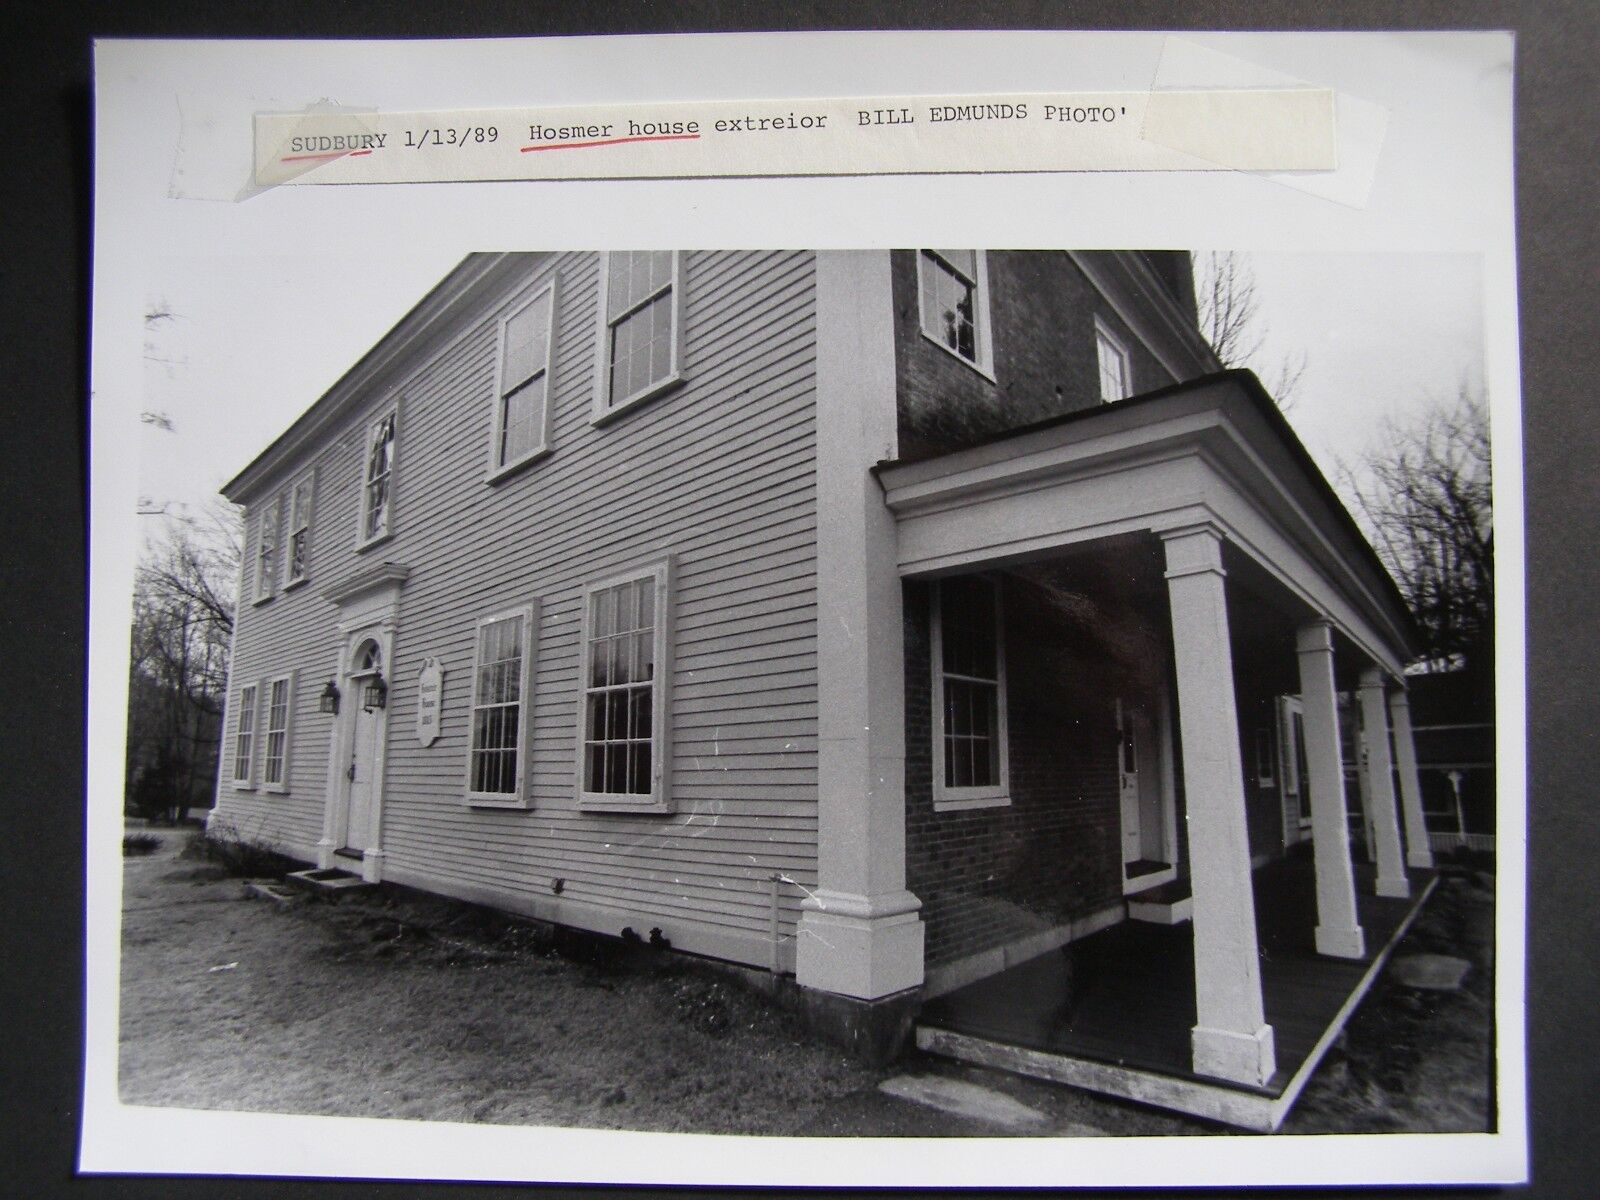 Vintage Sudbury MA Glossy Photo 1/13/89 Hosmer House Exterior